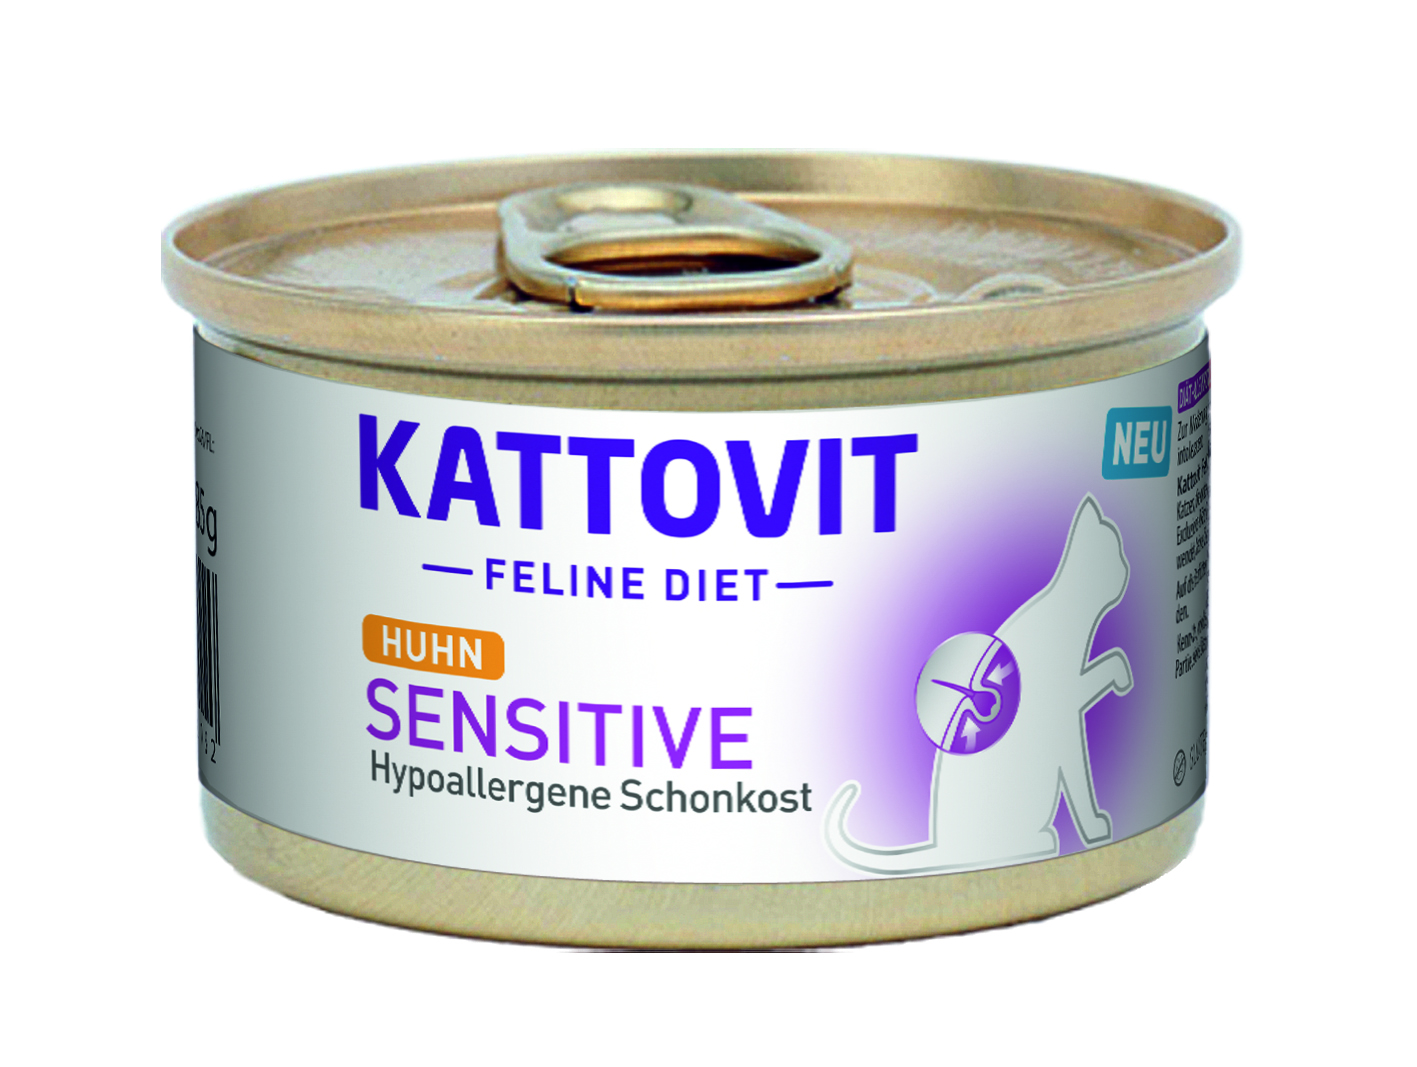 Kattovit Feline Diet Sensitive - Hypoallergene Schonkost (D-Re